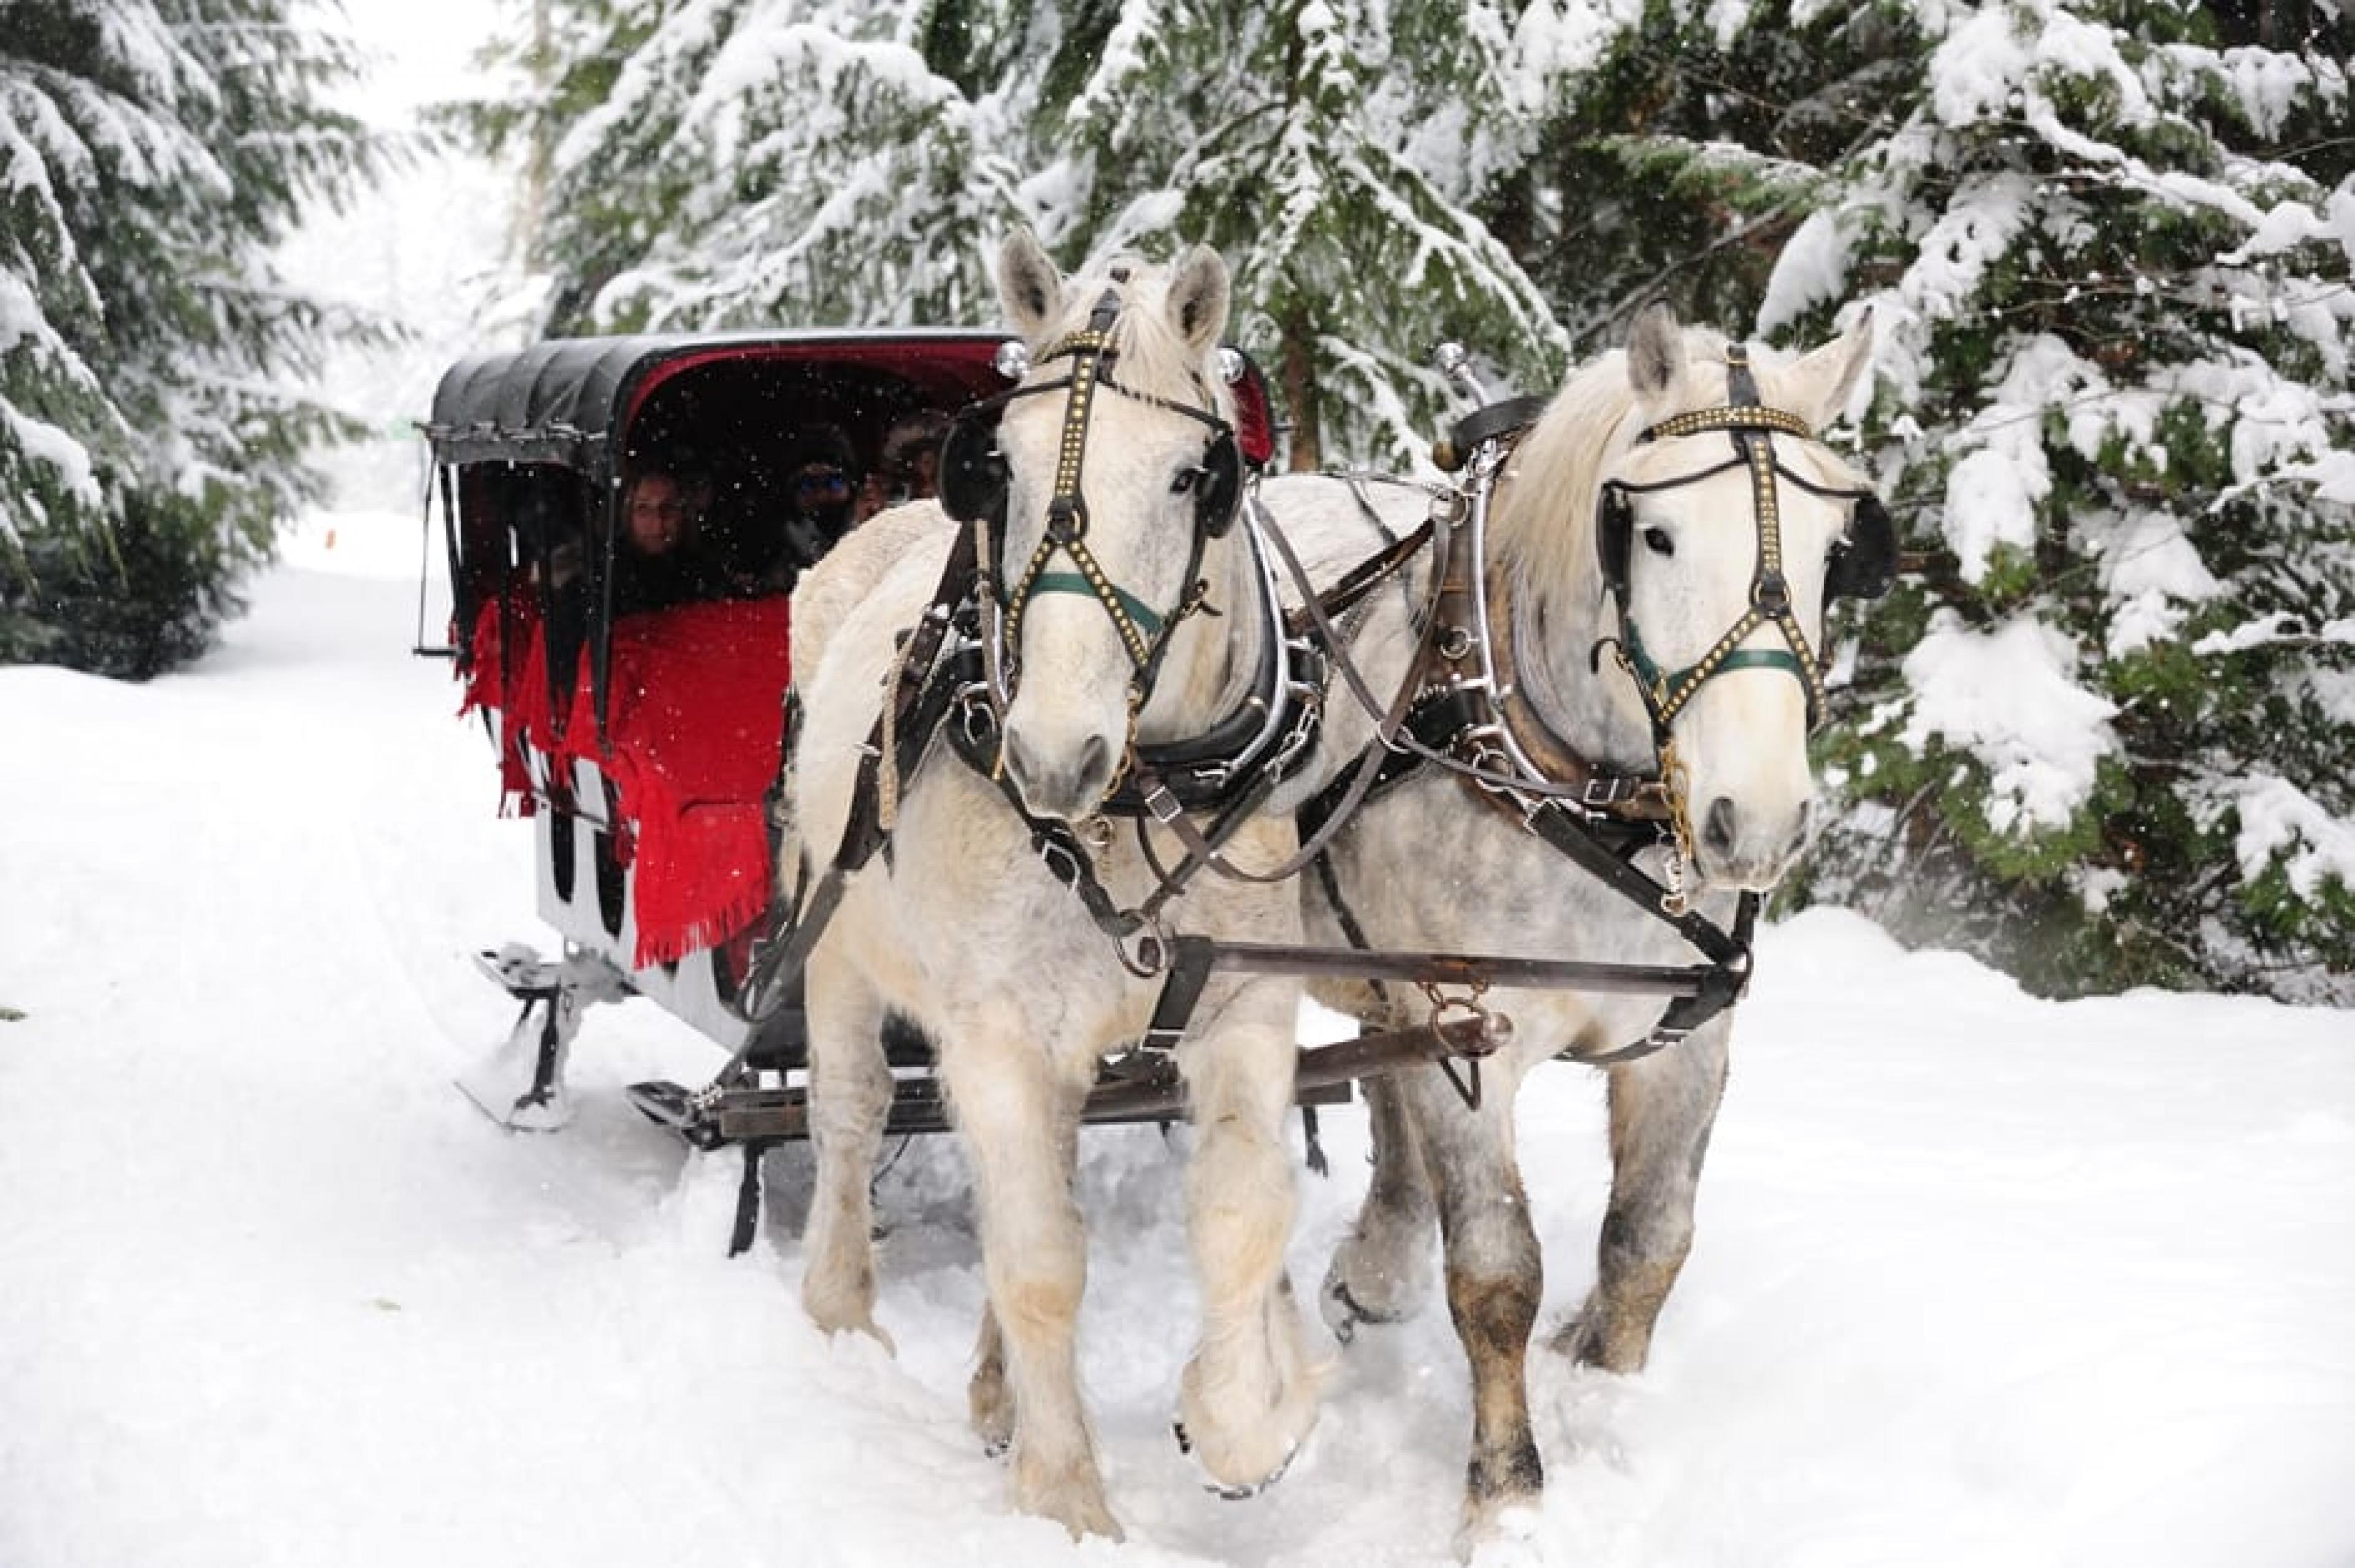 Horse cart at Sleigh Riding, Whistler, Canada - Courtesy Tourism Whistler, Steve Rogers